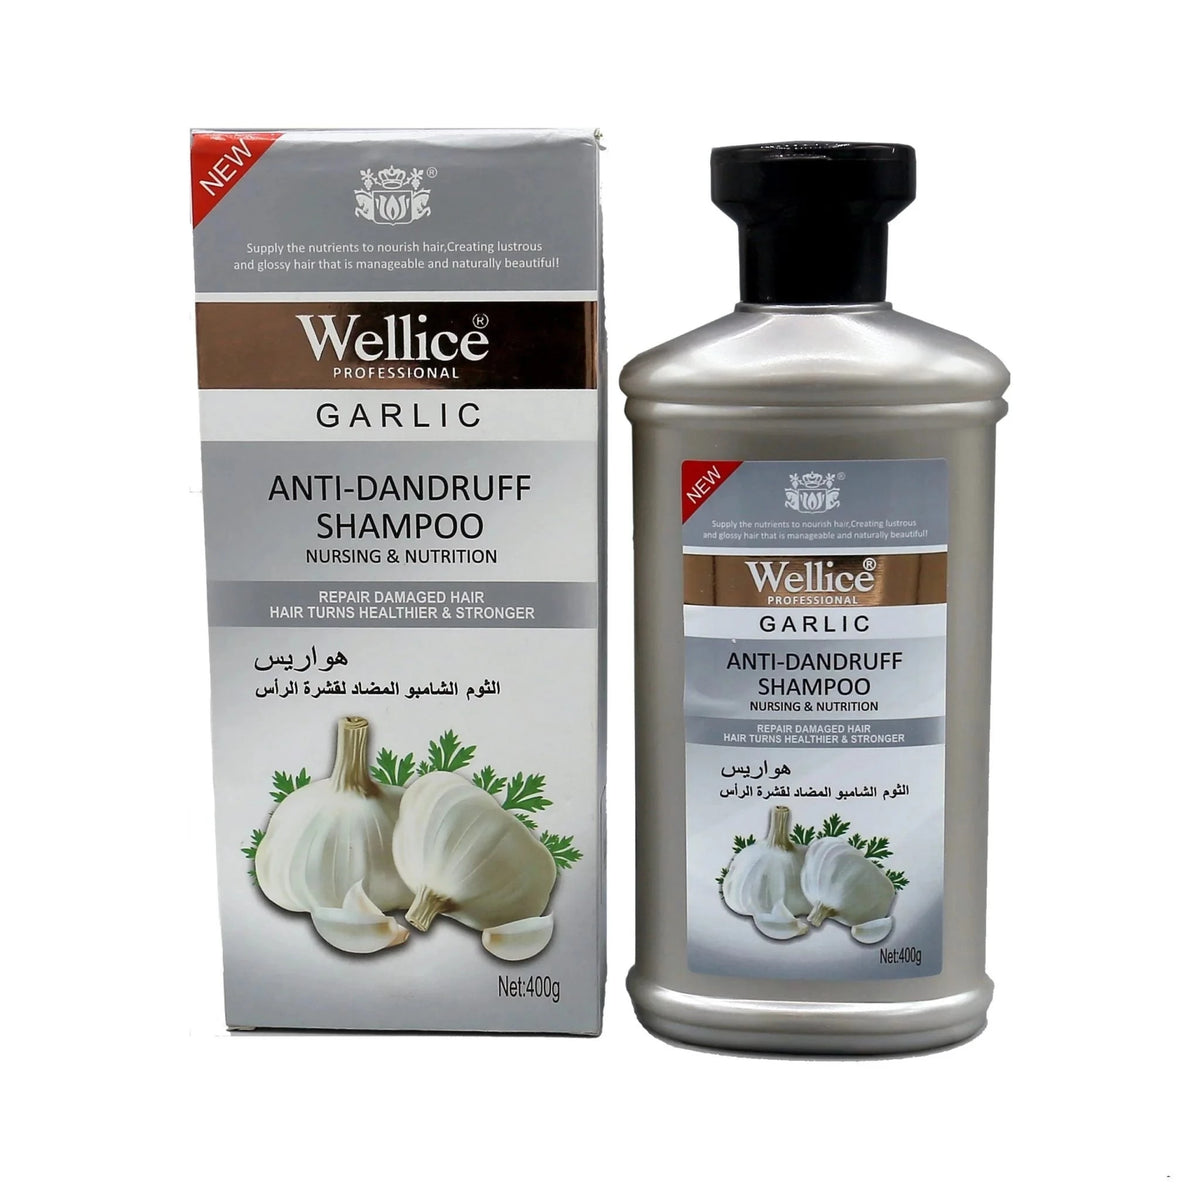 Wellice Garlic Anti-Dandruff Shampoo